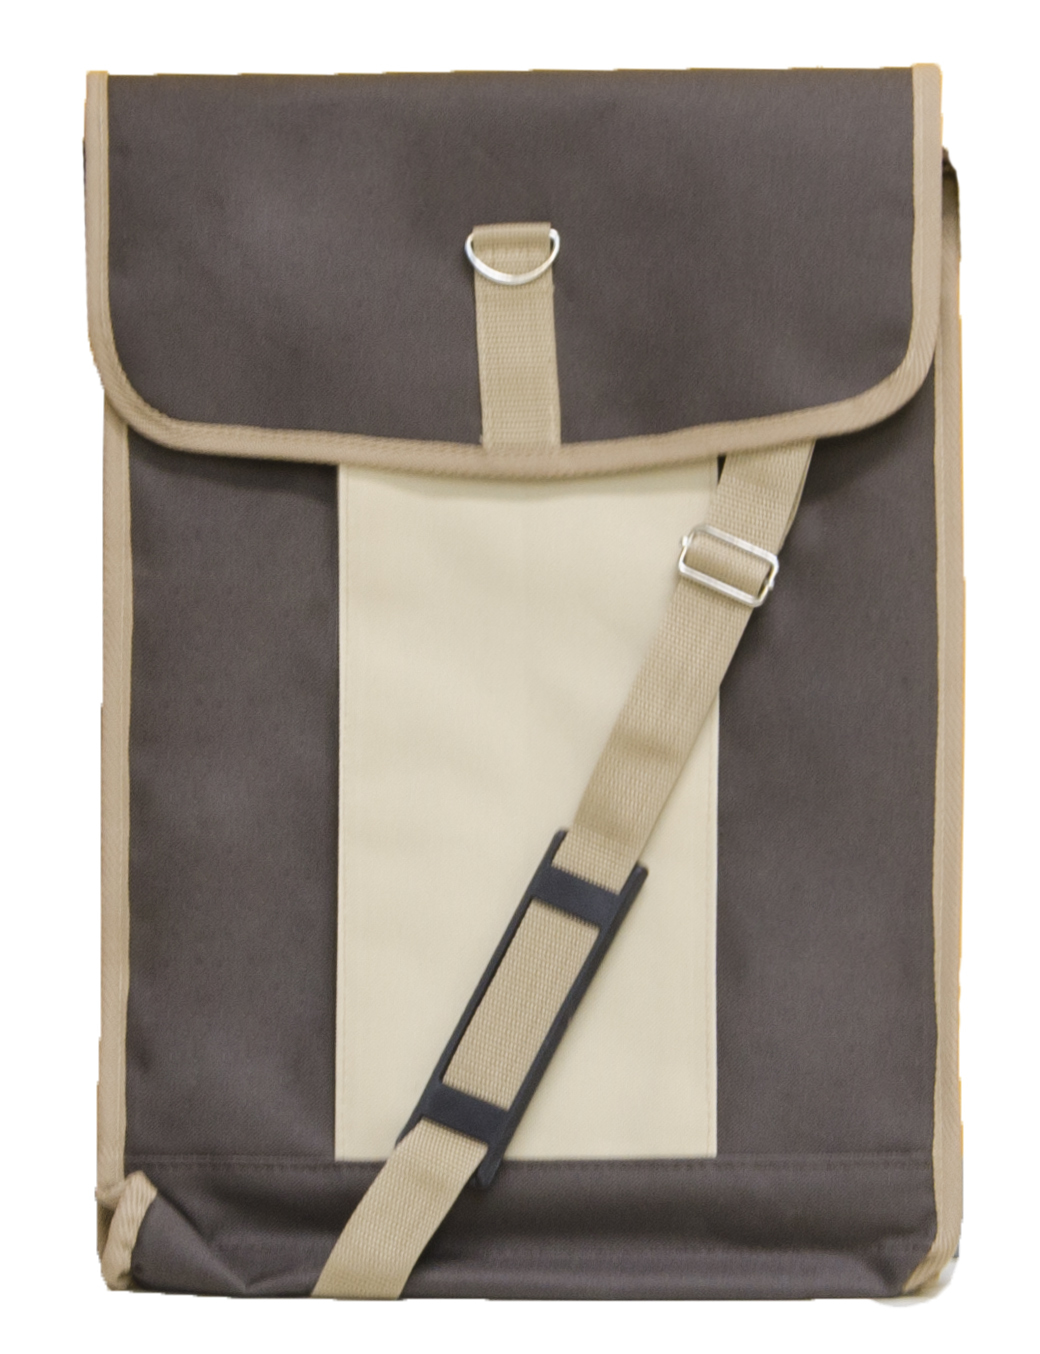 Сумка для планшета 42х30 (жест.) коричневая с бежевым карманом сумка c ручками guess downtown chic flap shldr